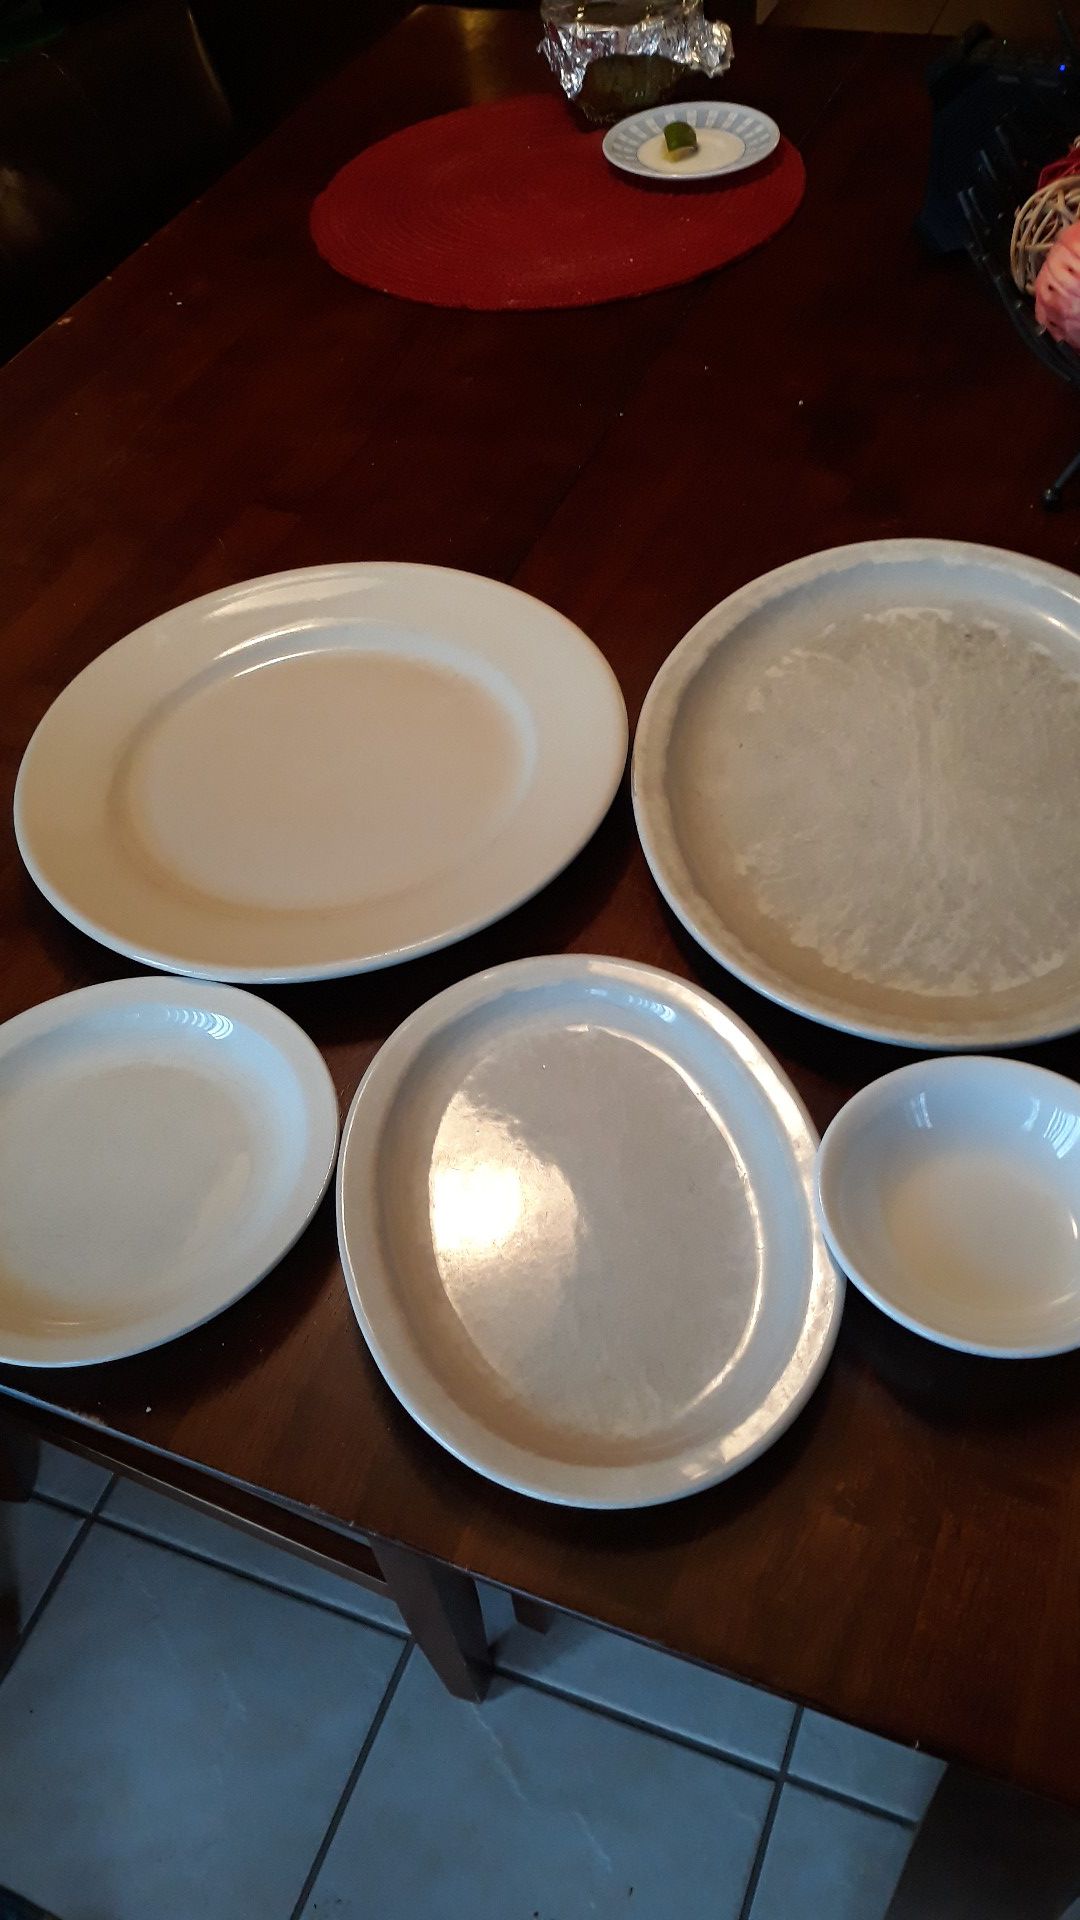 Restaurant plates set ( used )